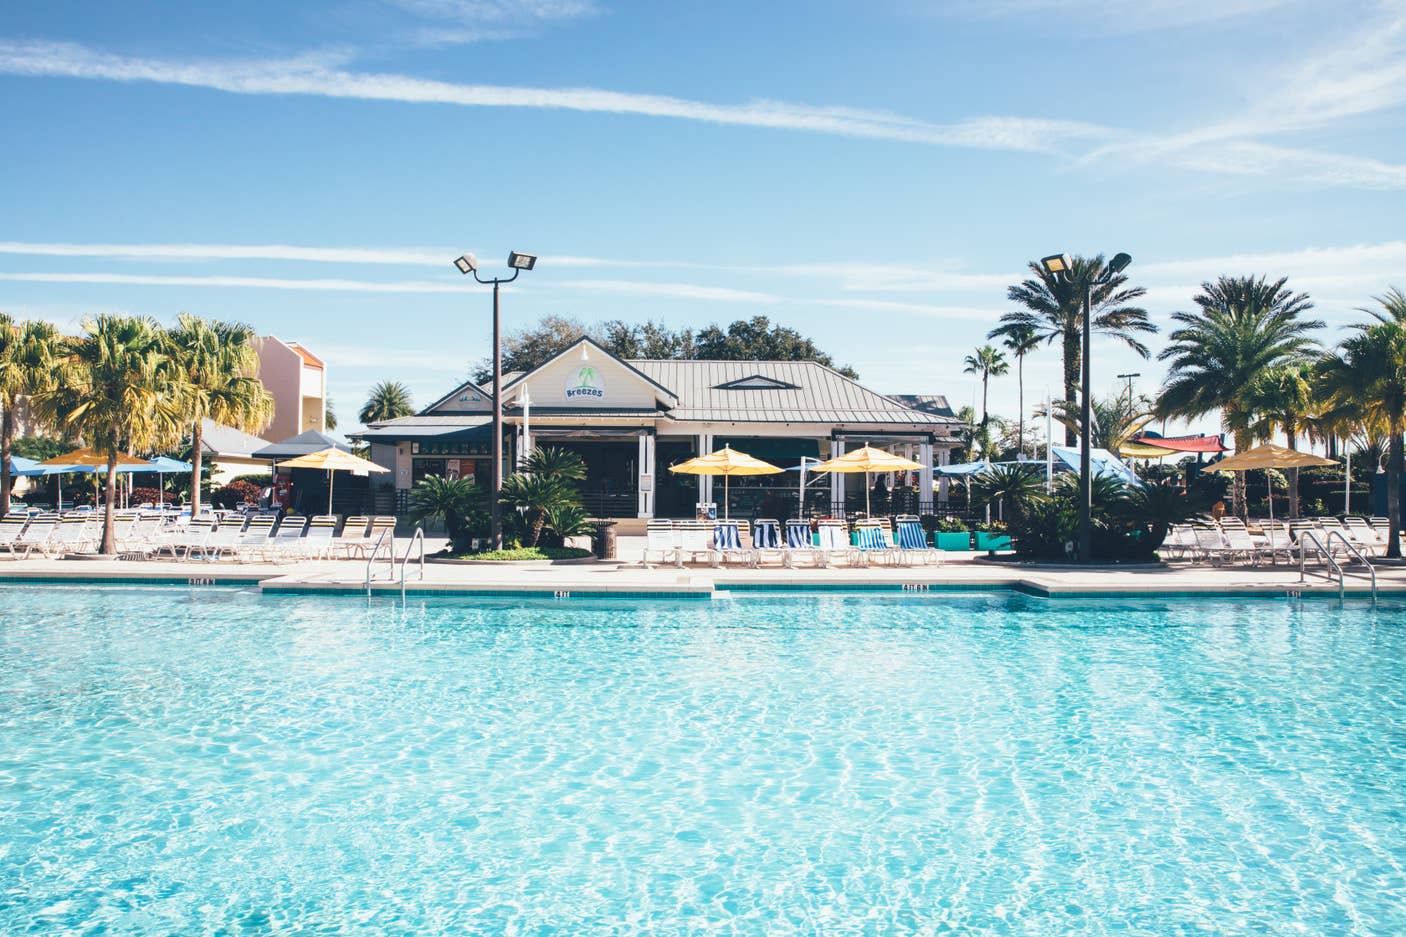 Orange Lake Resort – West Village Holiday Inn Club Vacations